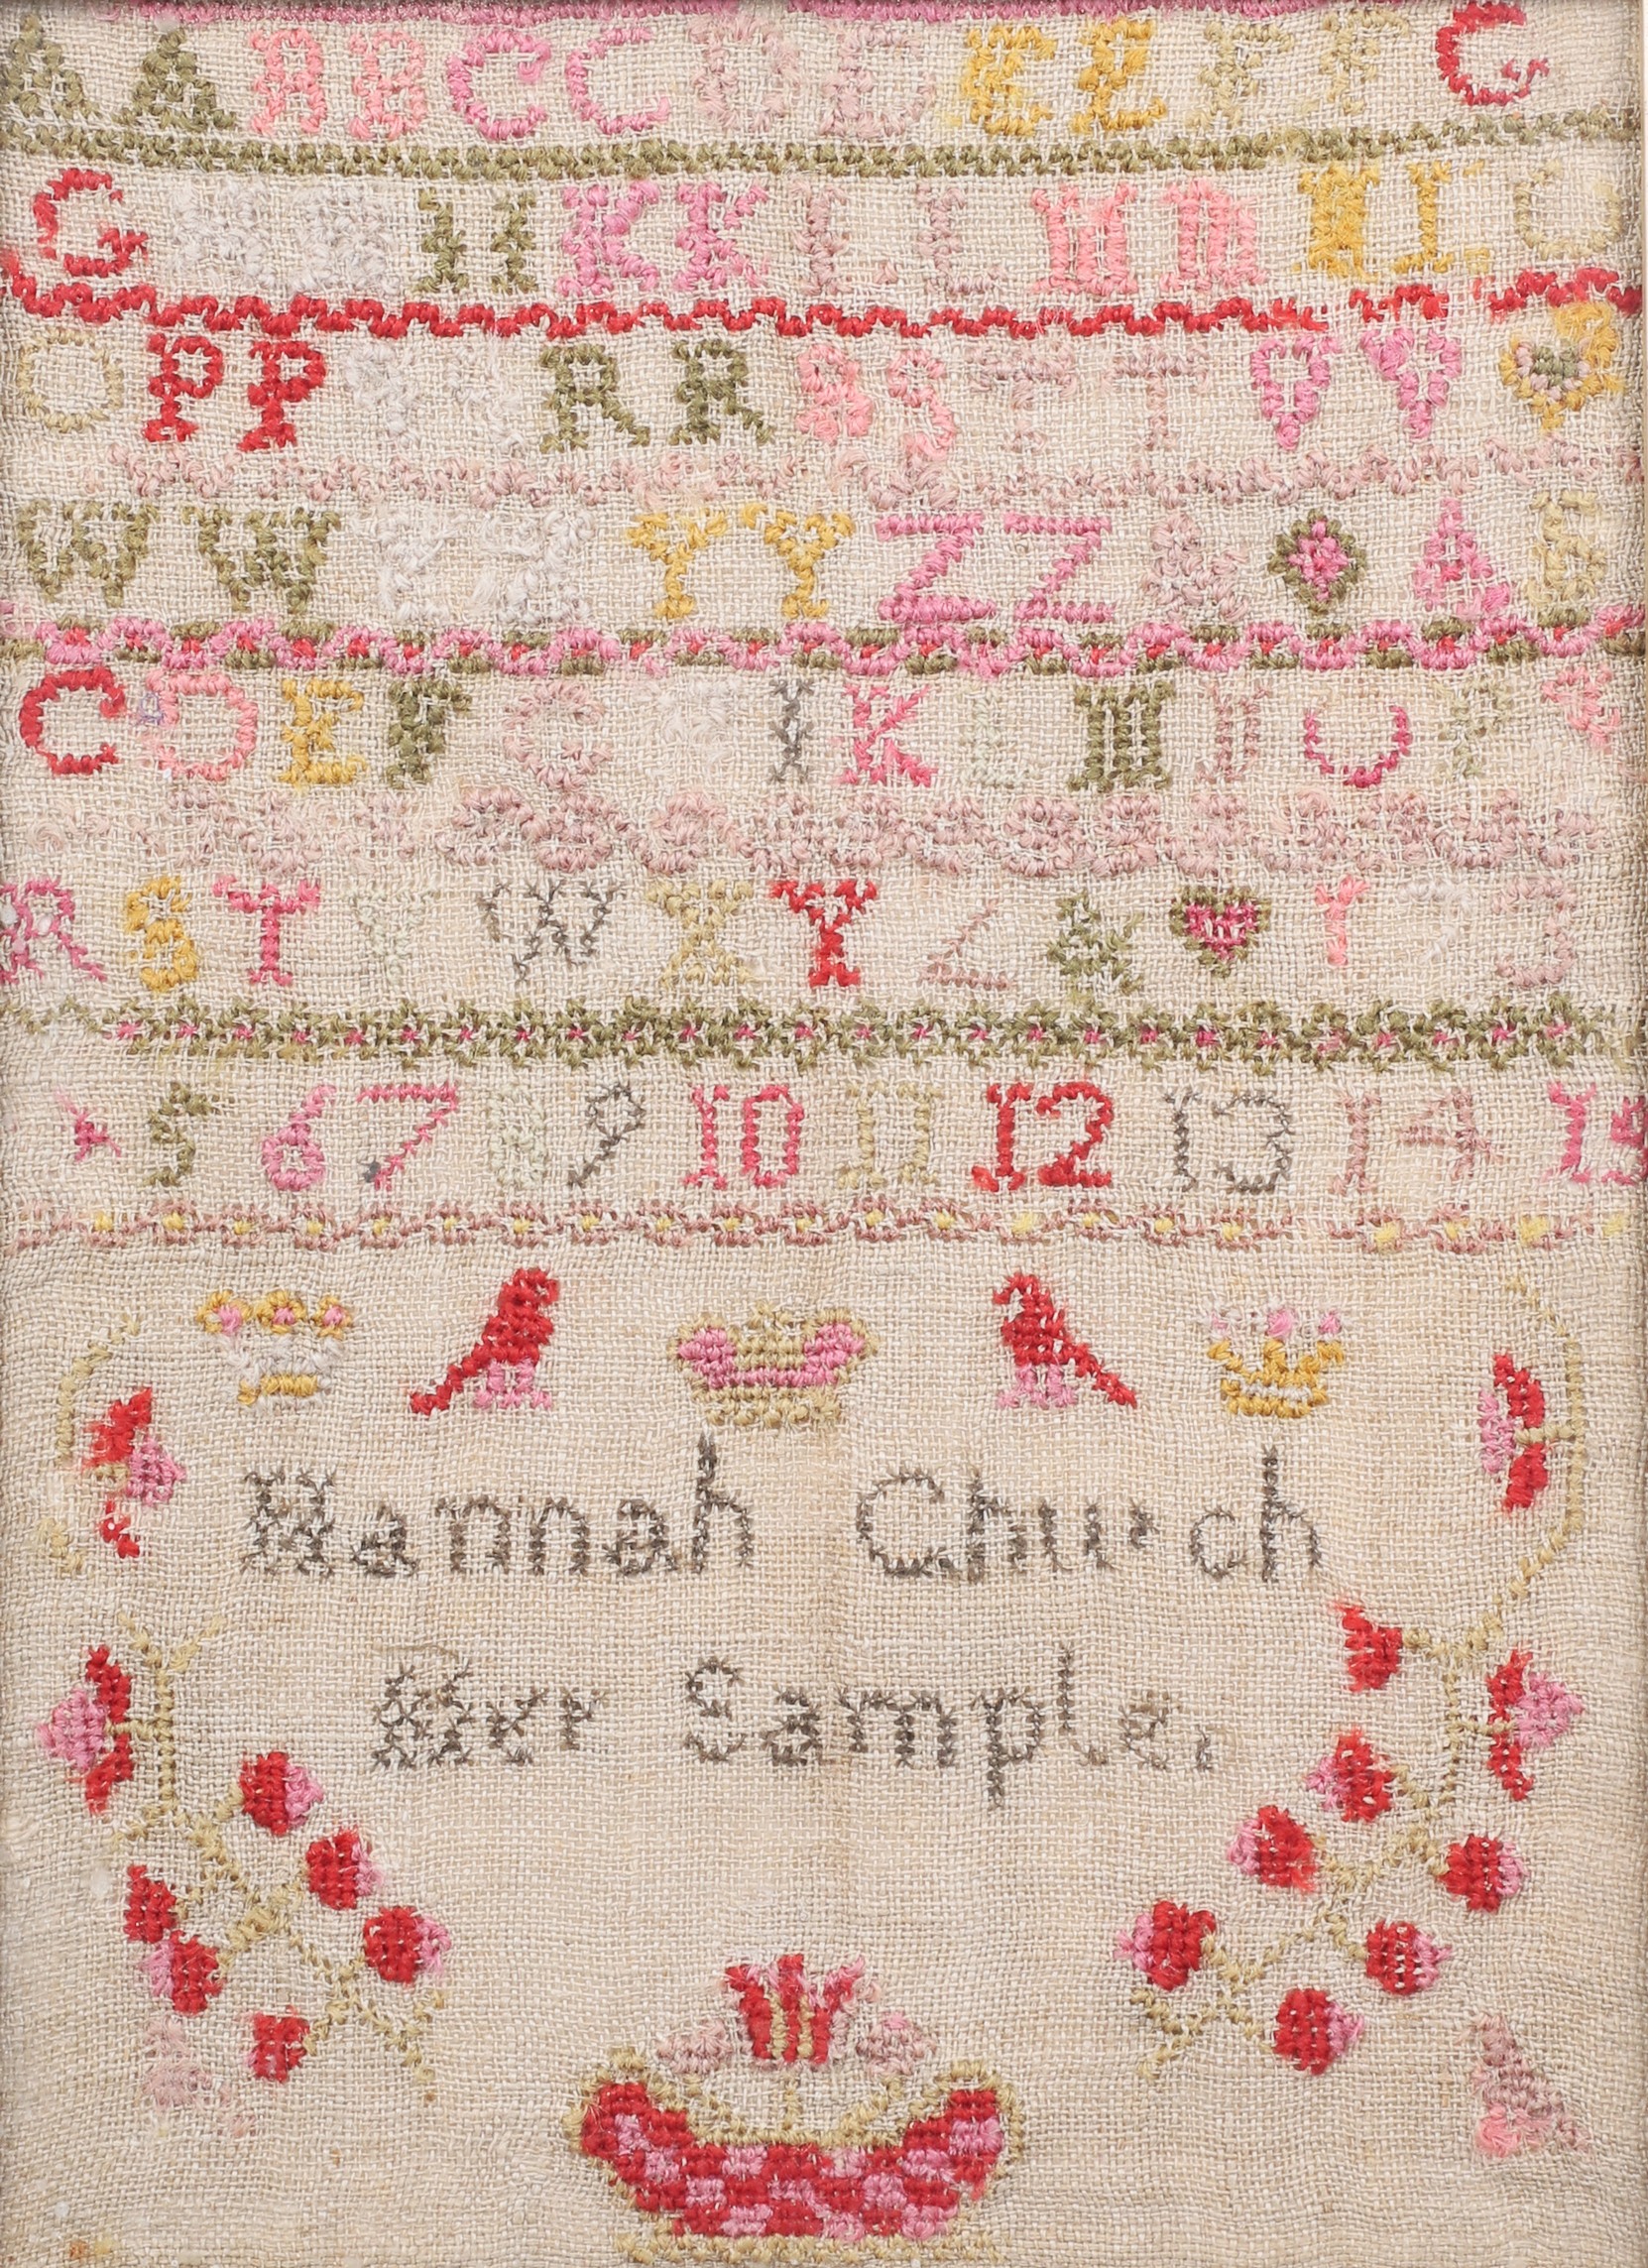 Cross stitch sampler signed Hannah 3b48b6